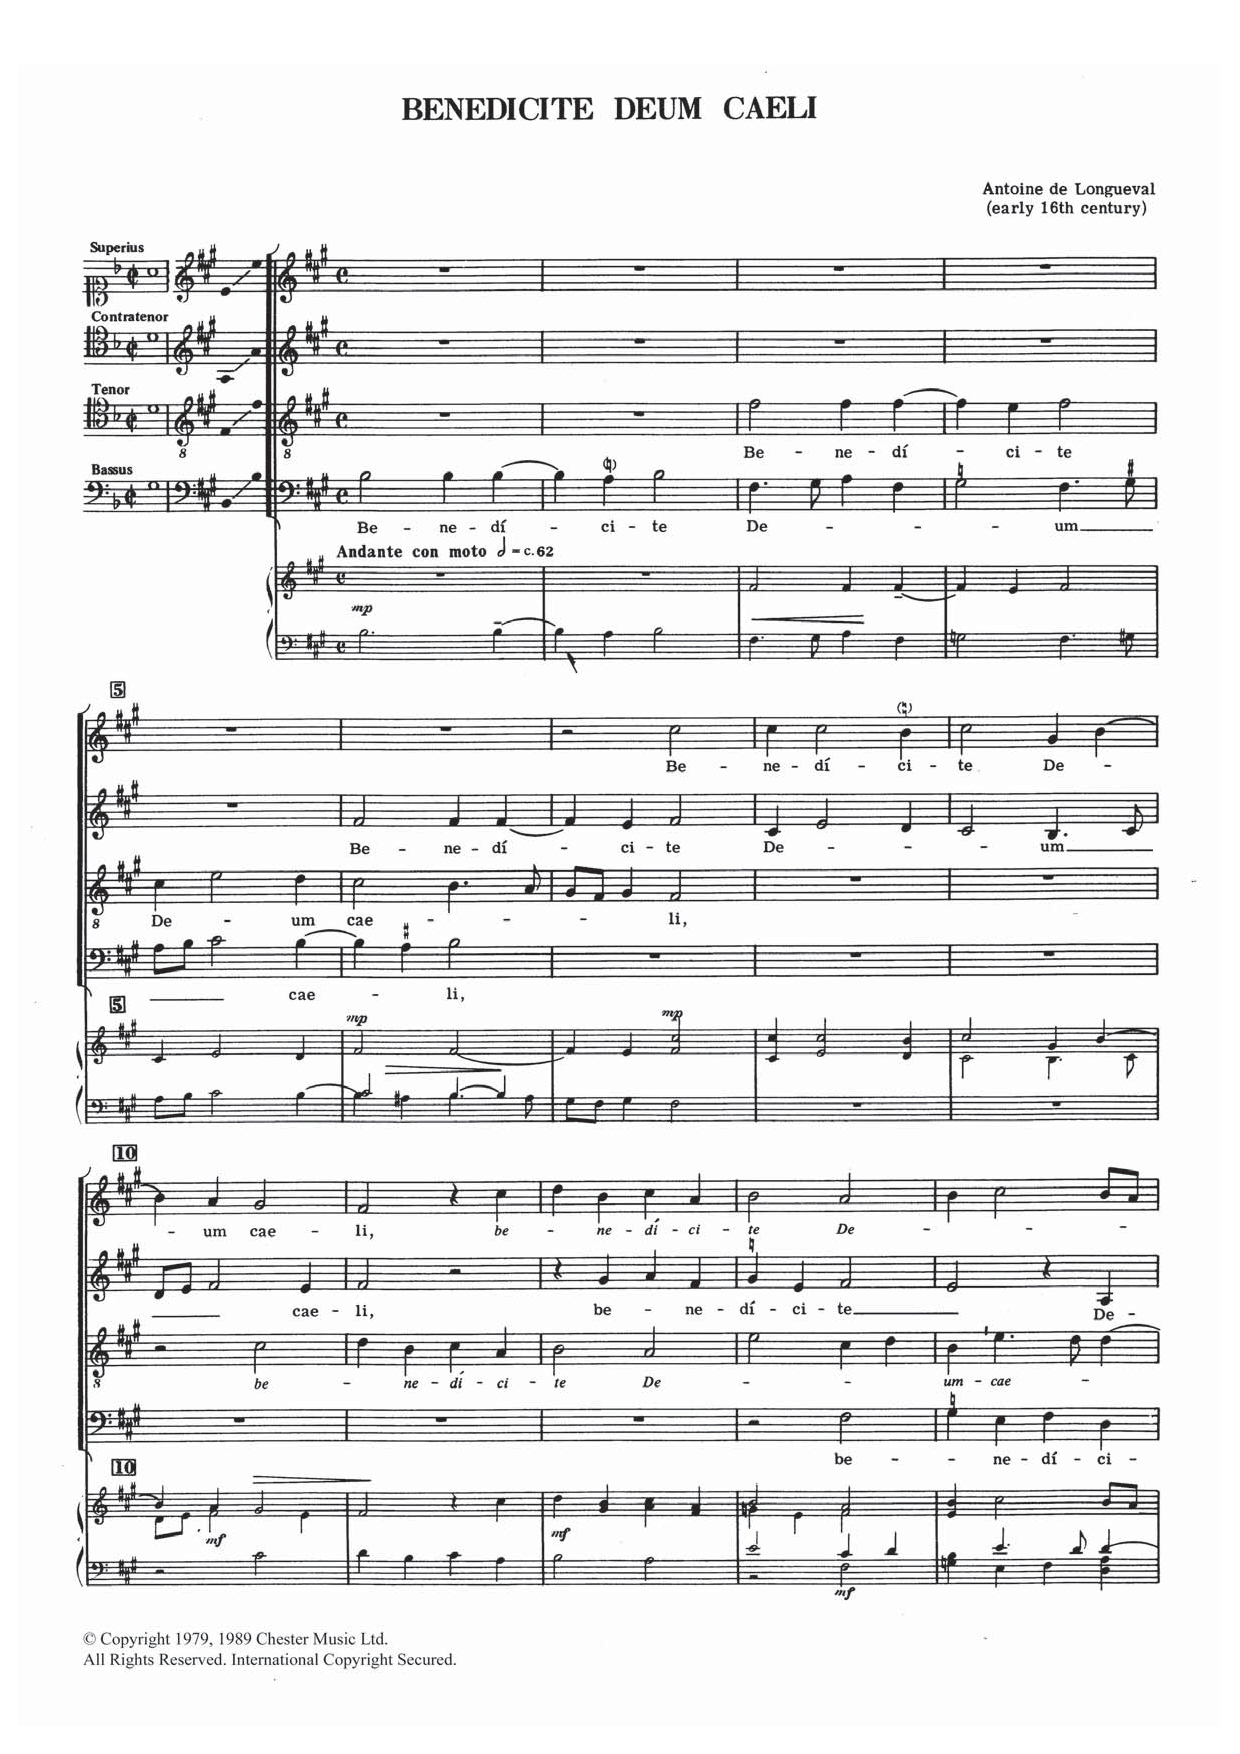 Antoine de Longueval Benedicte Deum Caeli sheet music notes and chords arranged for Choir